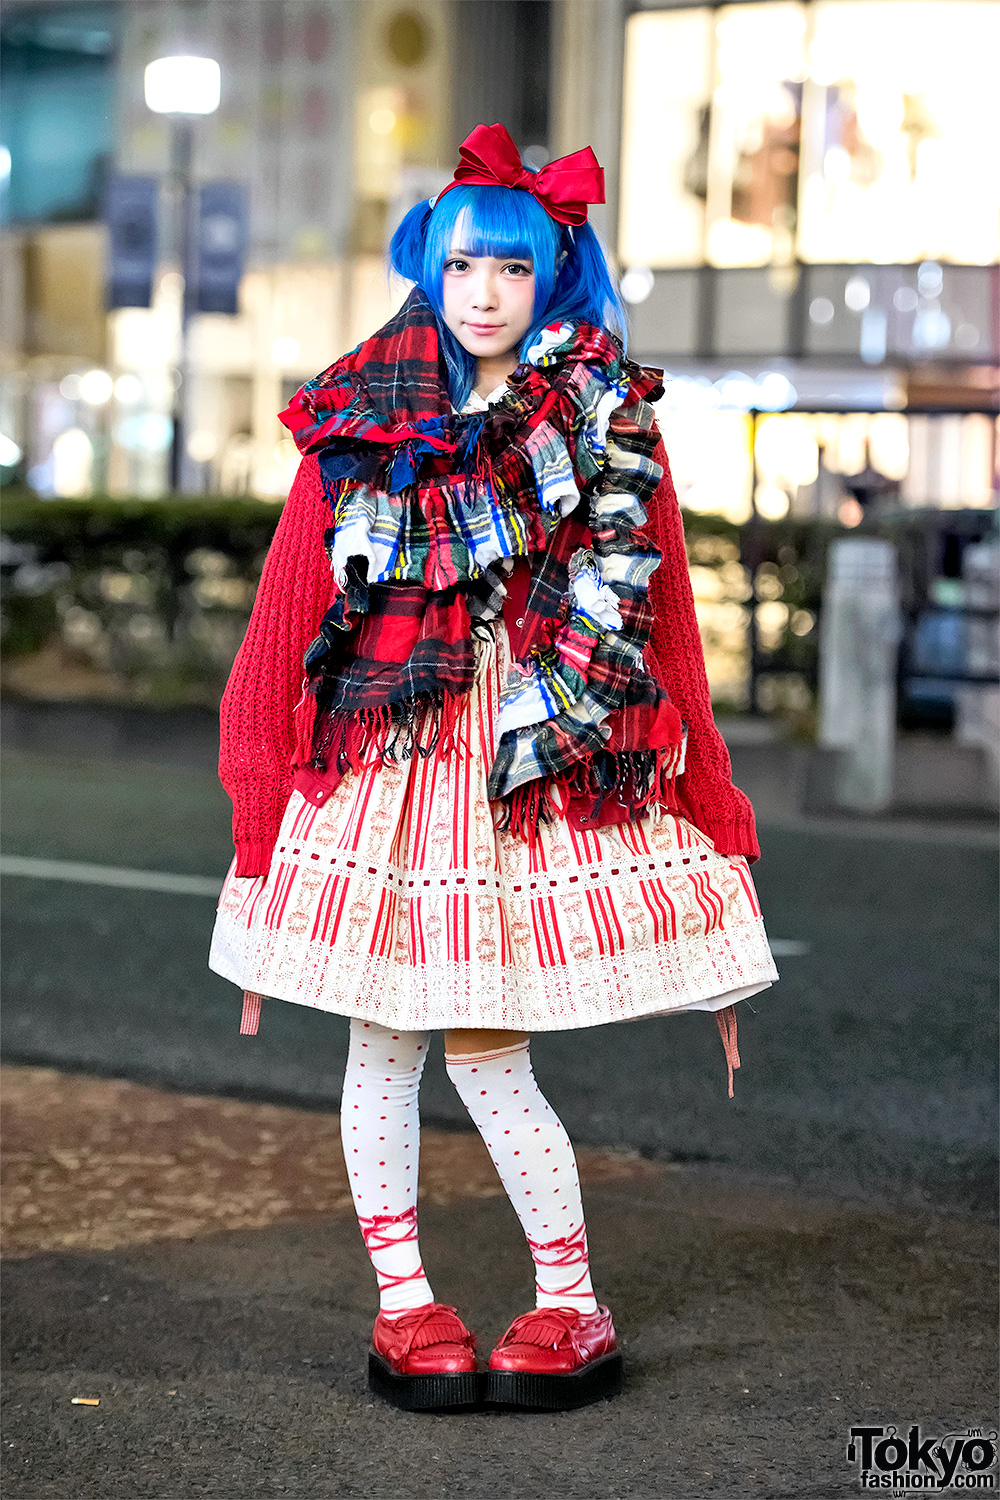  Japanese  Idol Style in Harajuku w Candye Syrup Hair Pink 